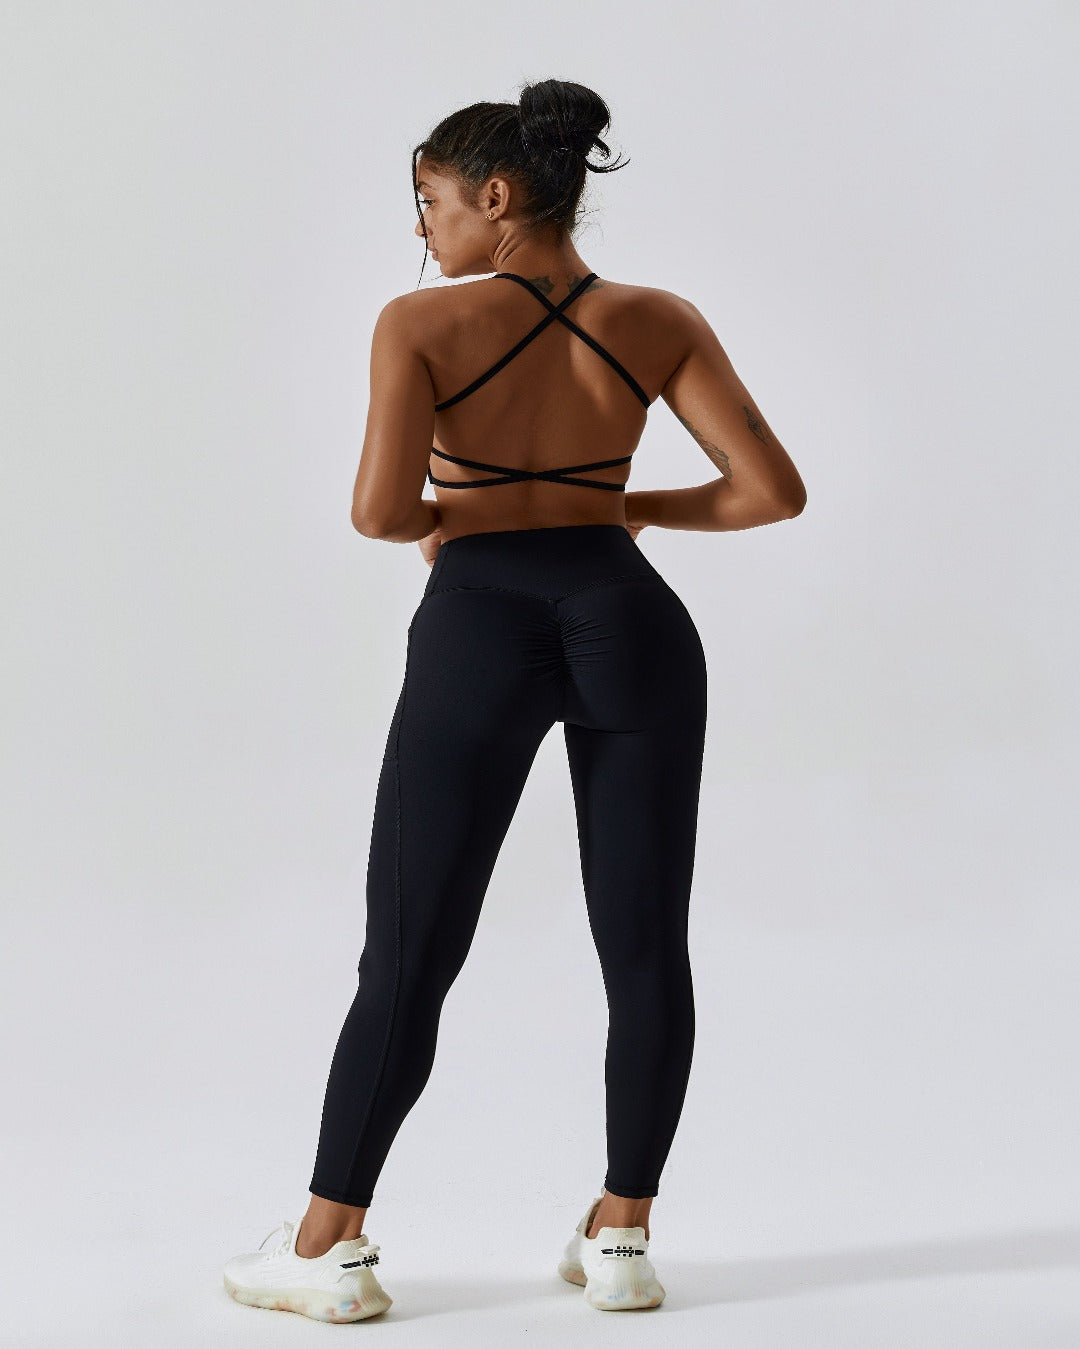 DRTY Fitness Womens Gym Yoga Pants Scrunch Butt Bum Contour Leggings Black  S/M/L | eBay